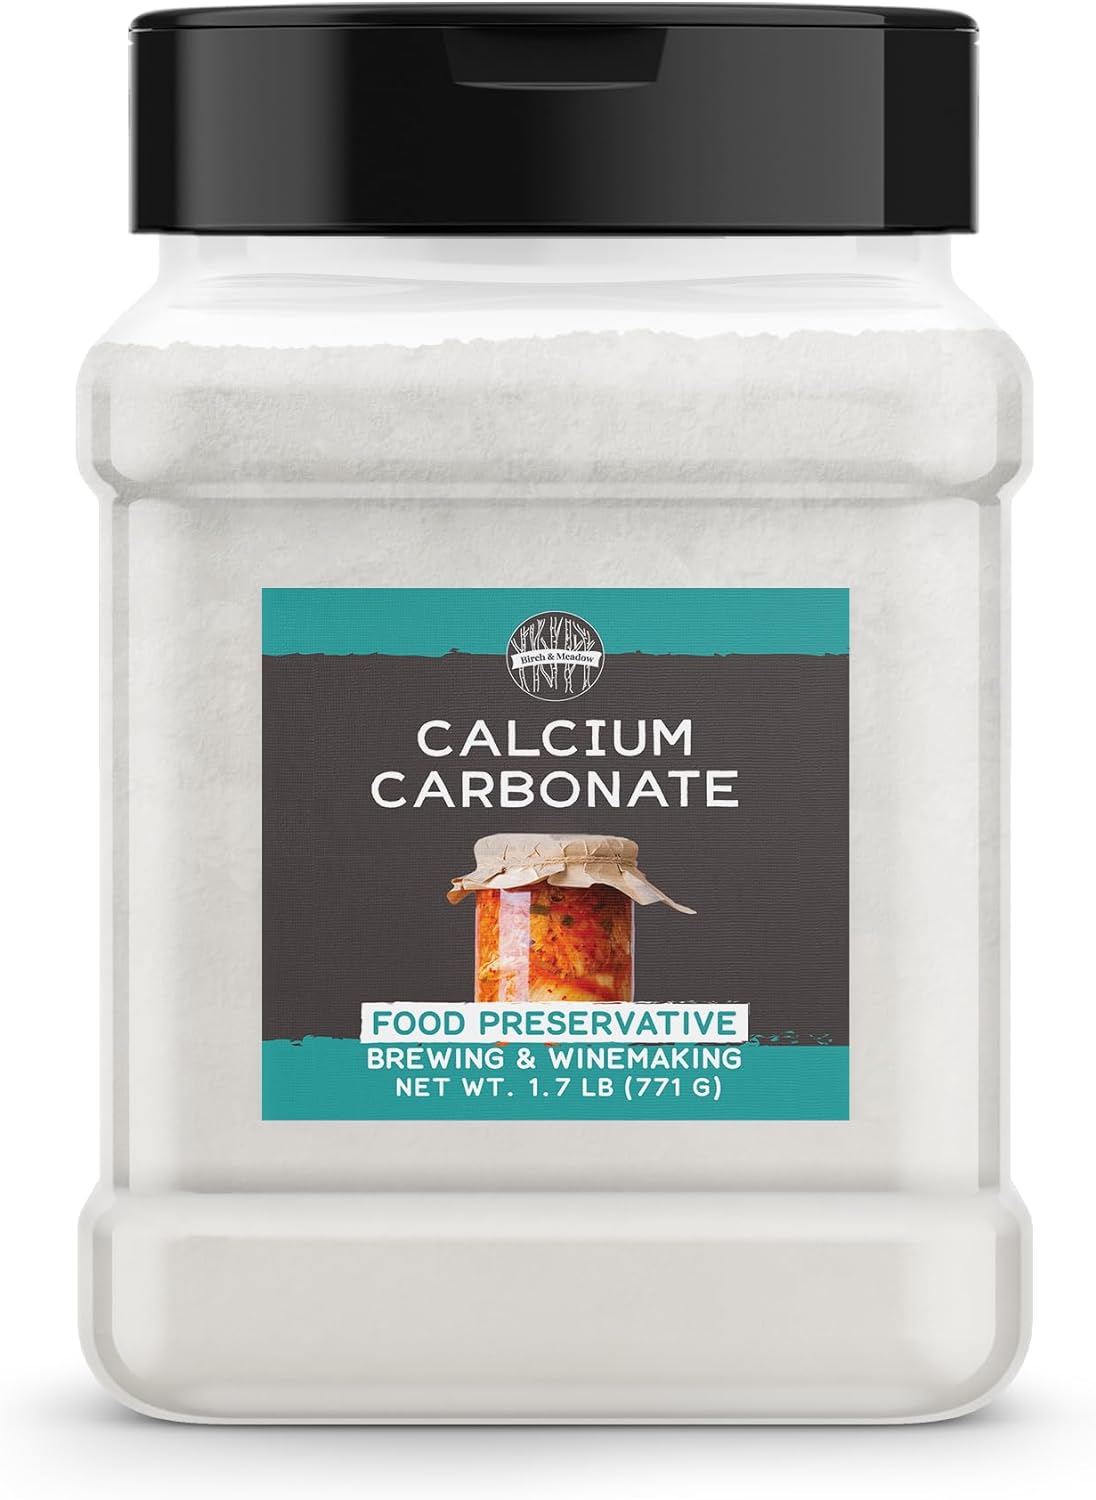 Birch & Meadow Calcium Carbonate, 1.7 lb, Food Preservative, Winemaking & Brewing